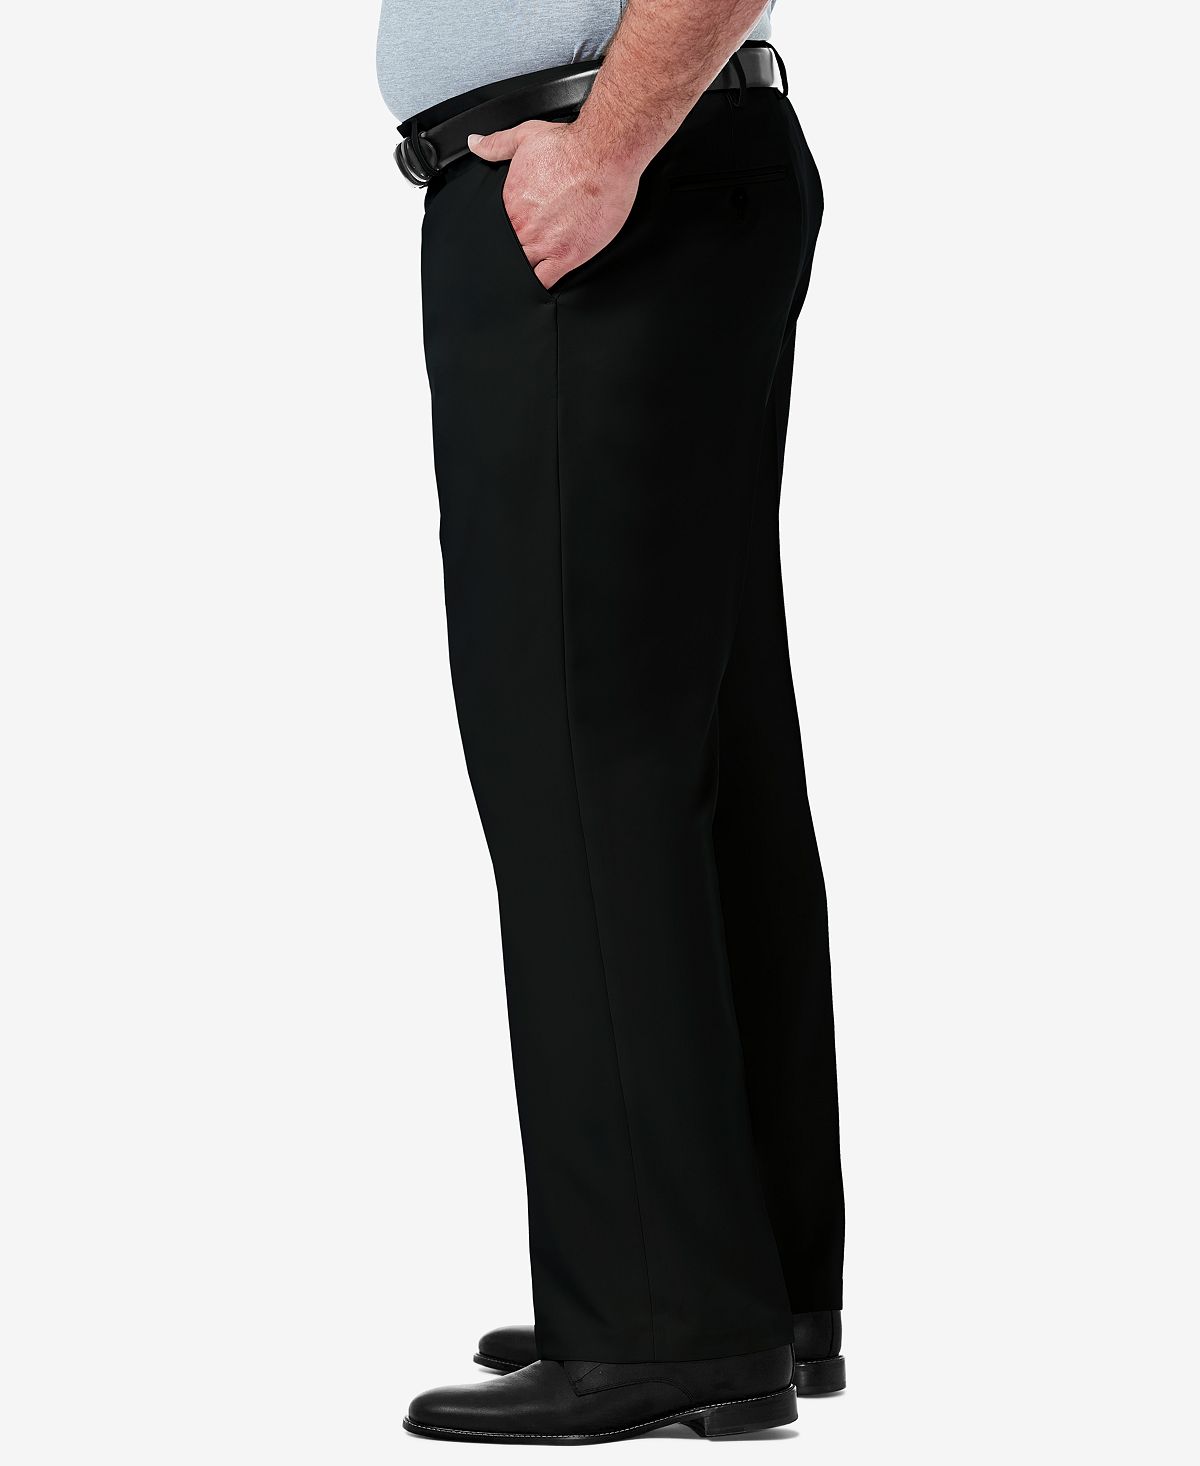 Haggar Big & Tall Premium Comfort Stretch Classic-fit Solid Flat Front Dress Pants Black